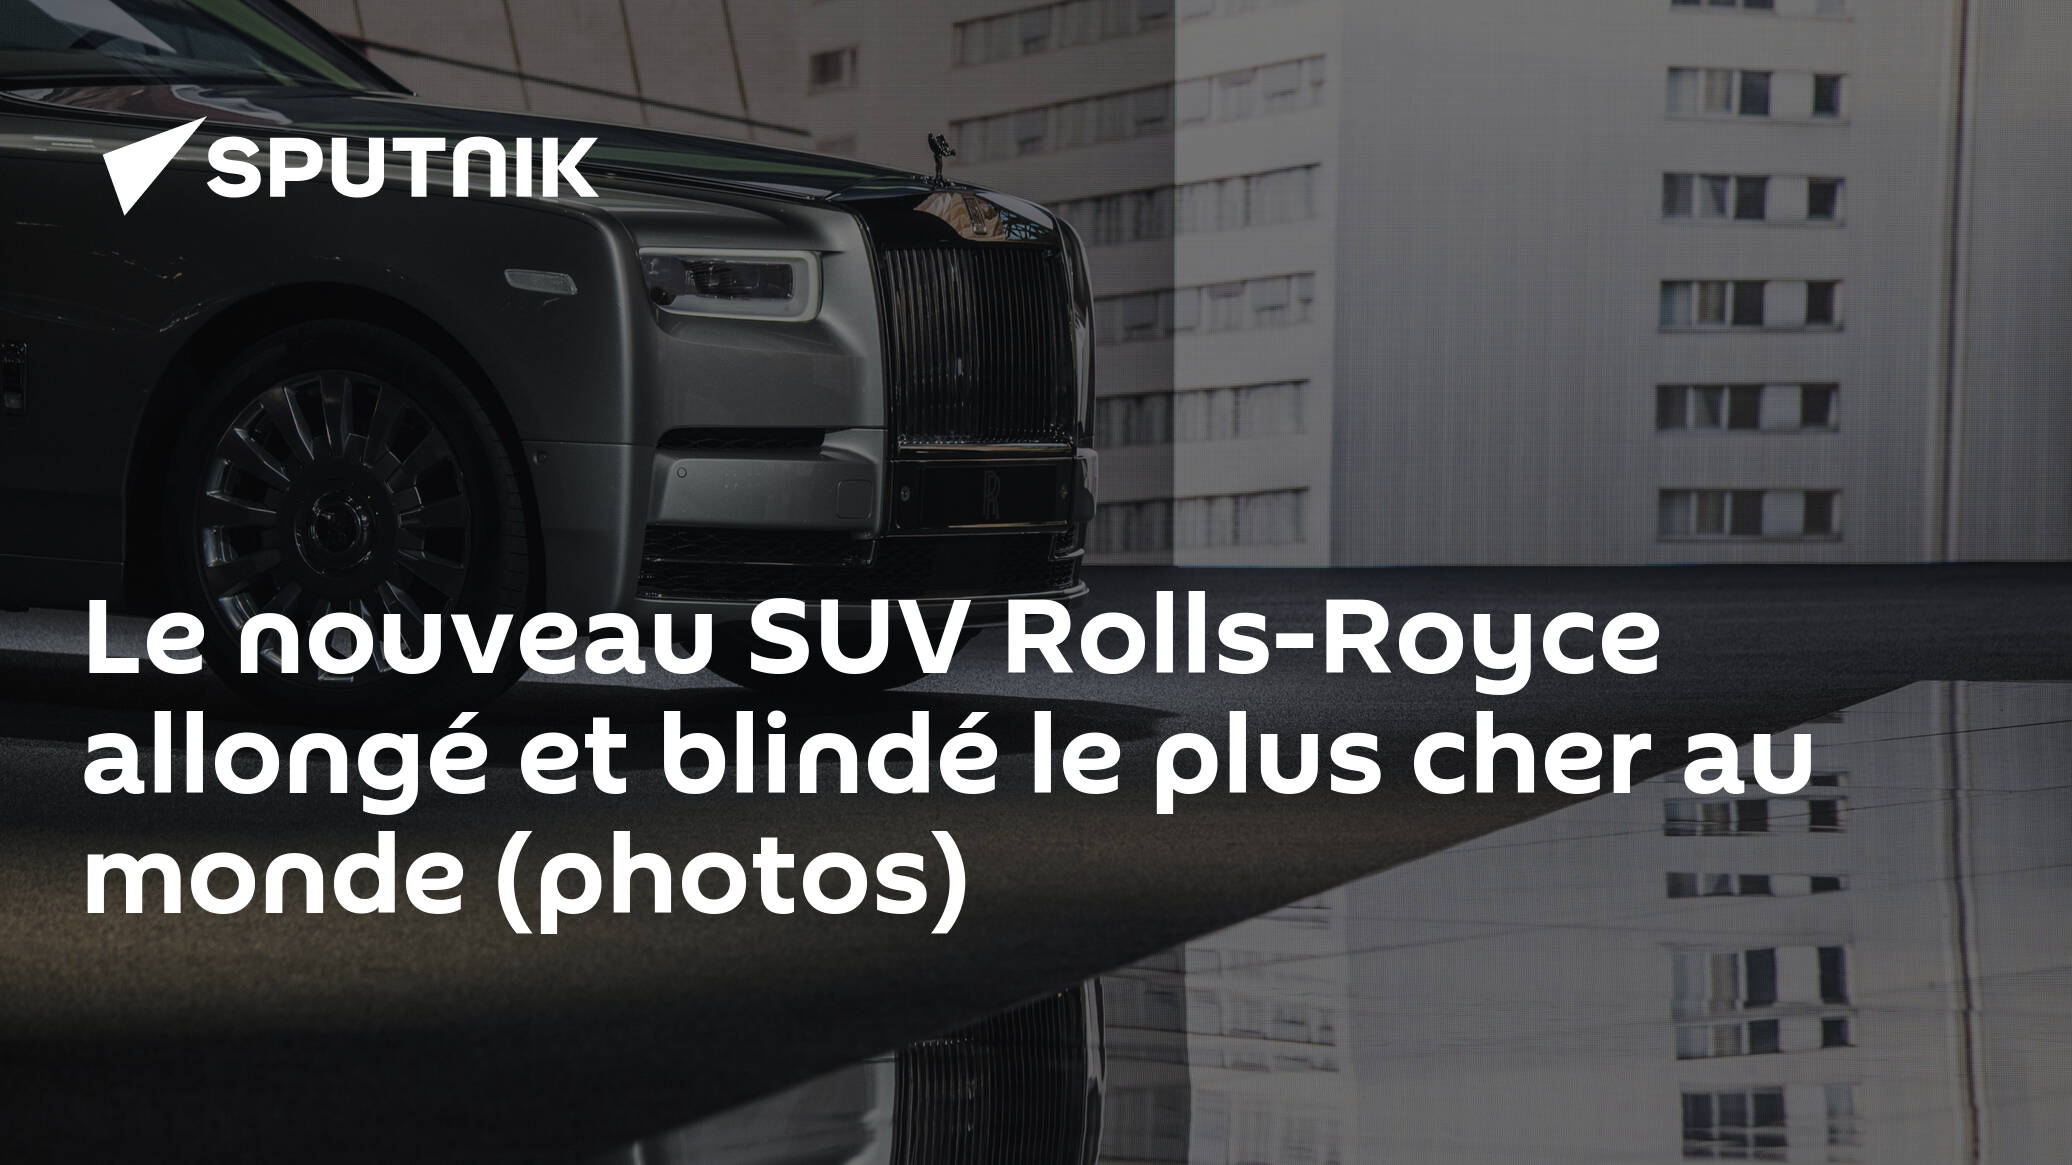 Yep, it's a £1.6m, bombproof Rolls-Royce Cullinan limo